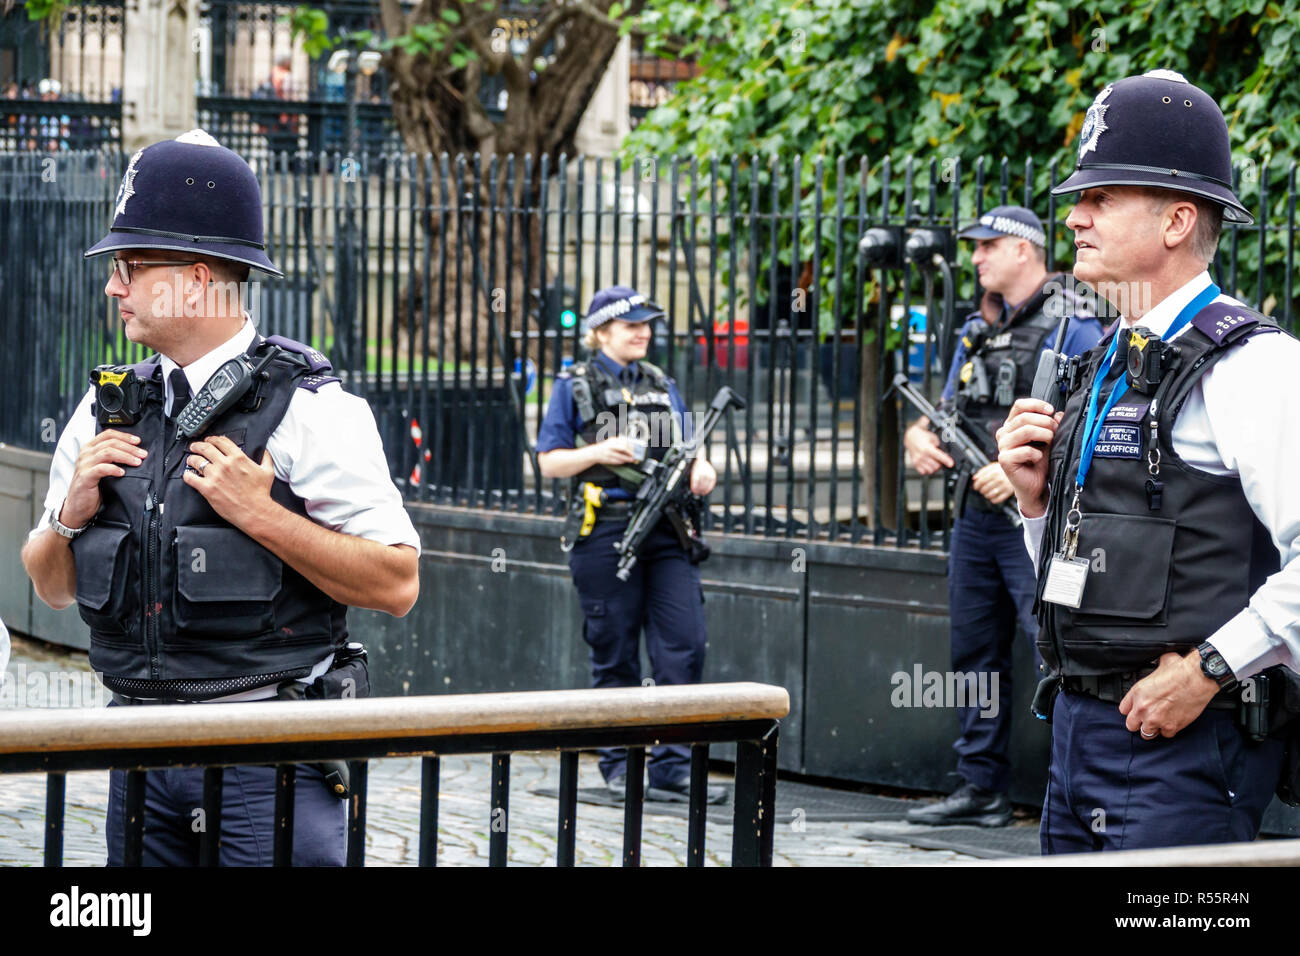 Vereinigtes Königreich England London, Palace of Westminster Parlament, Sicherheitspolizisten bewaffnete Wachen Körper Kamera, kugelsichere Weste Uniform bobby helme Stockfoto